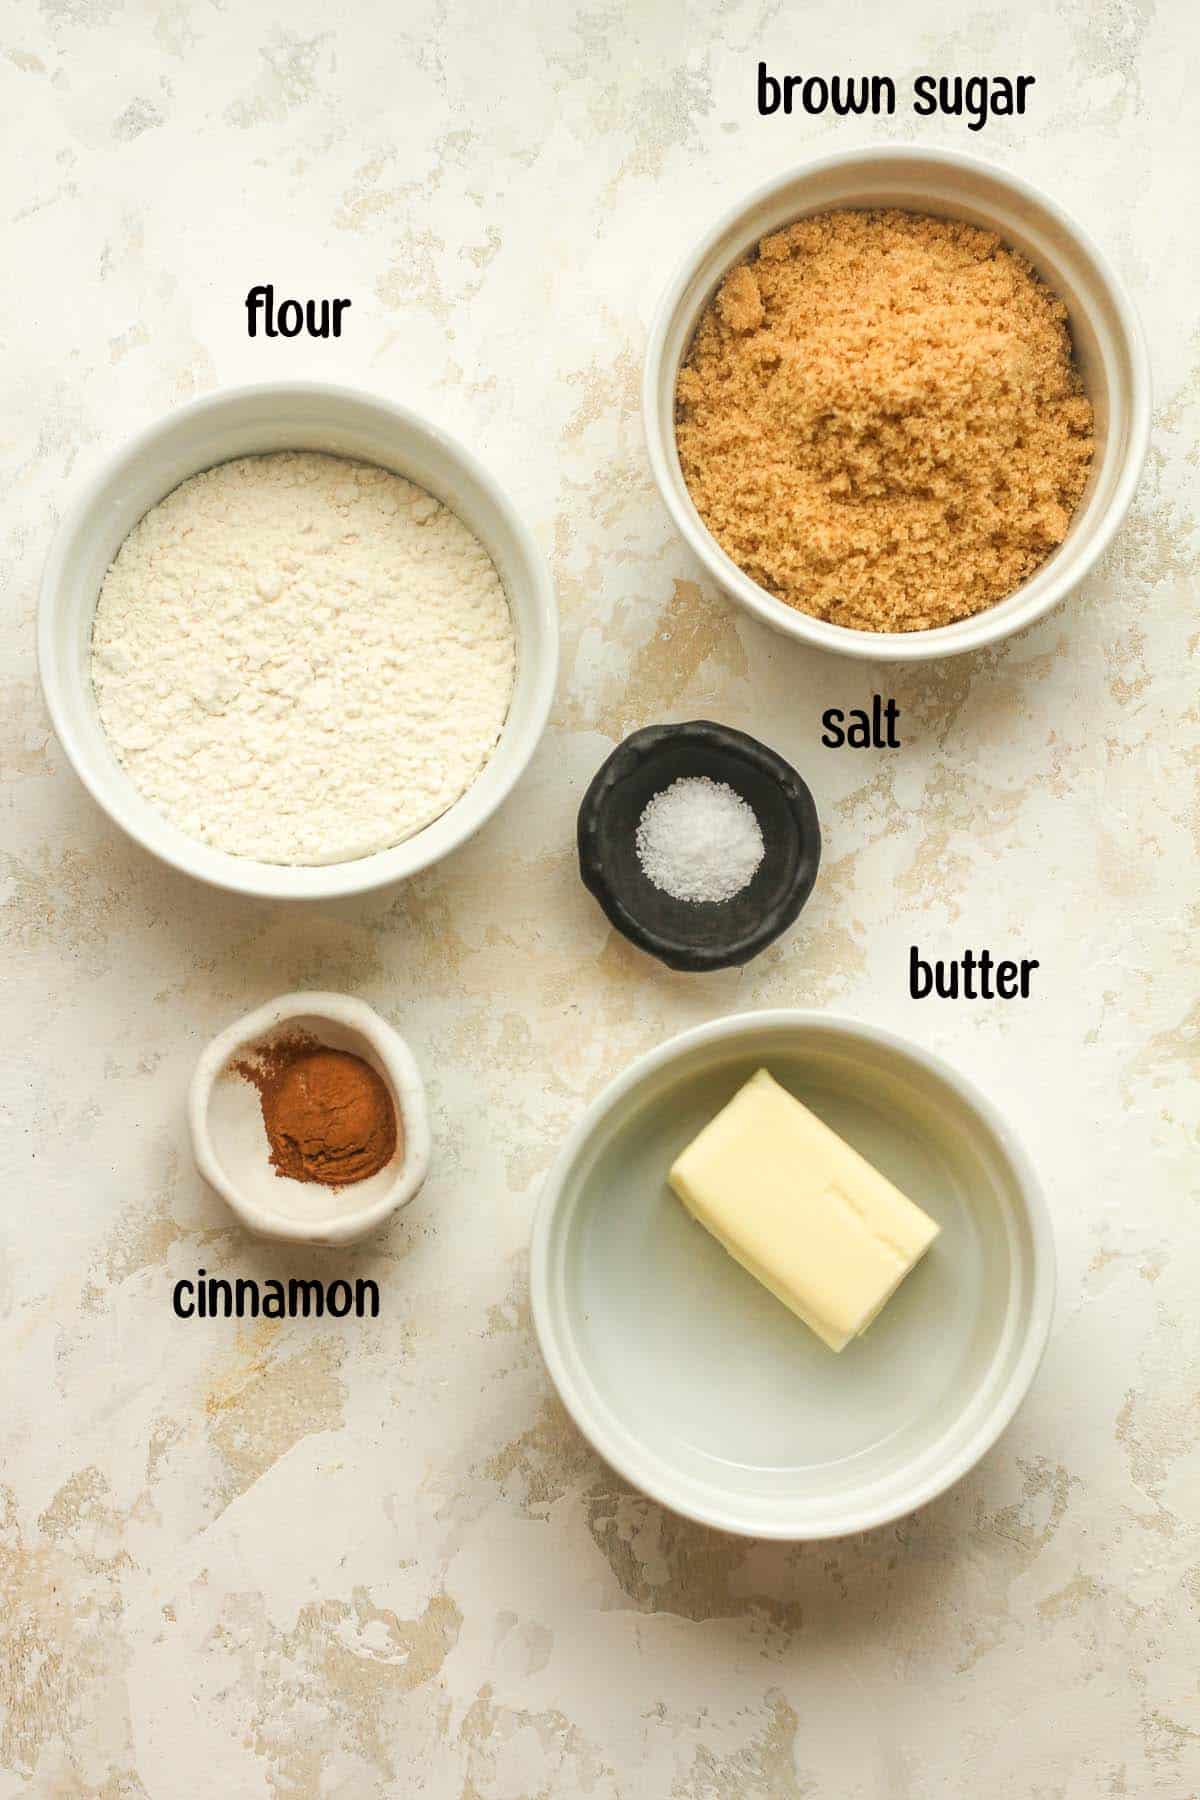 The streusel cake ingredients.